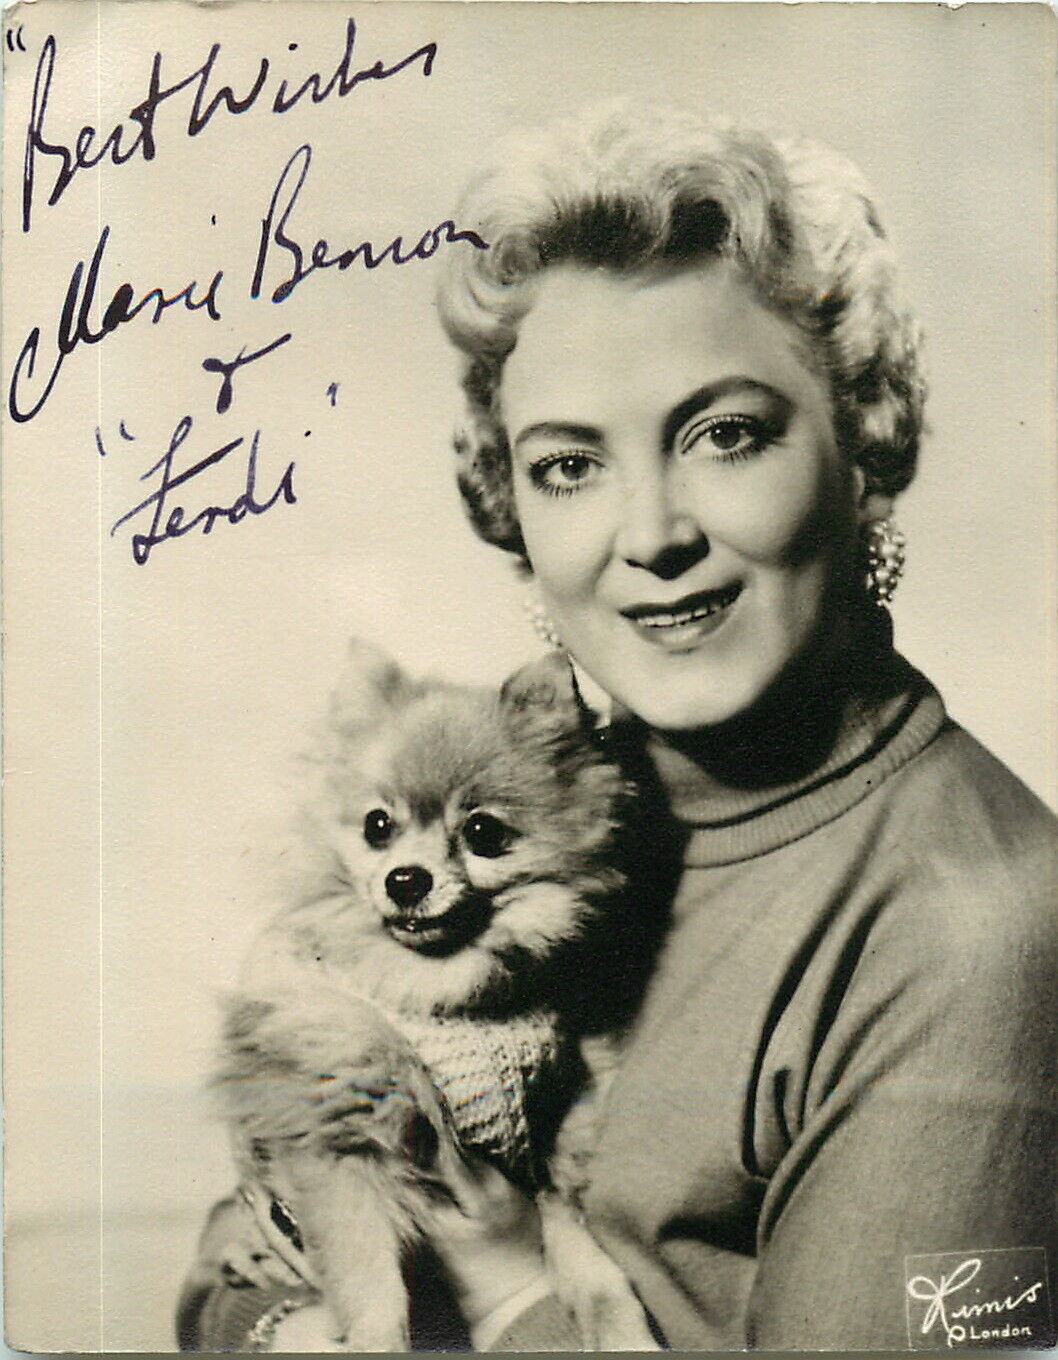 Vintage Signed Autograph Photo - Australian Singer The Stargazers - Marie Benson